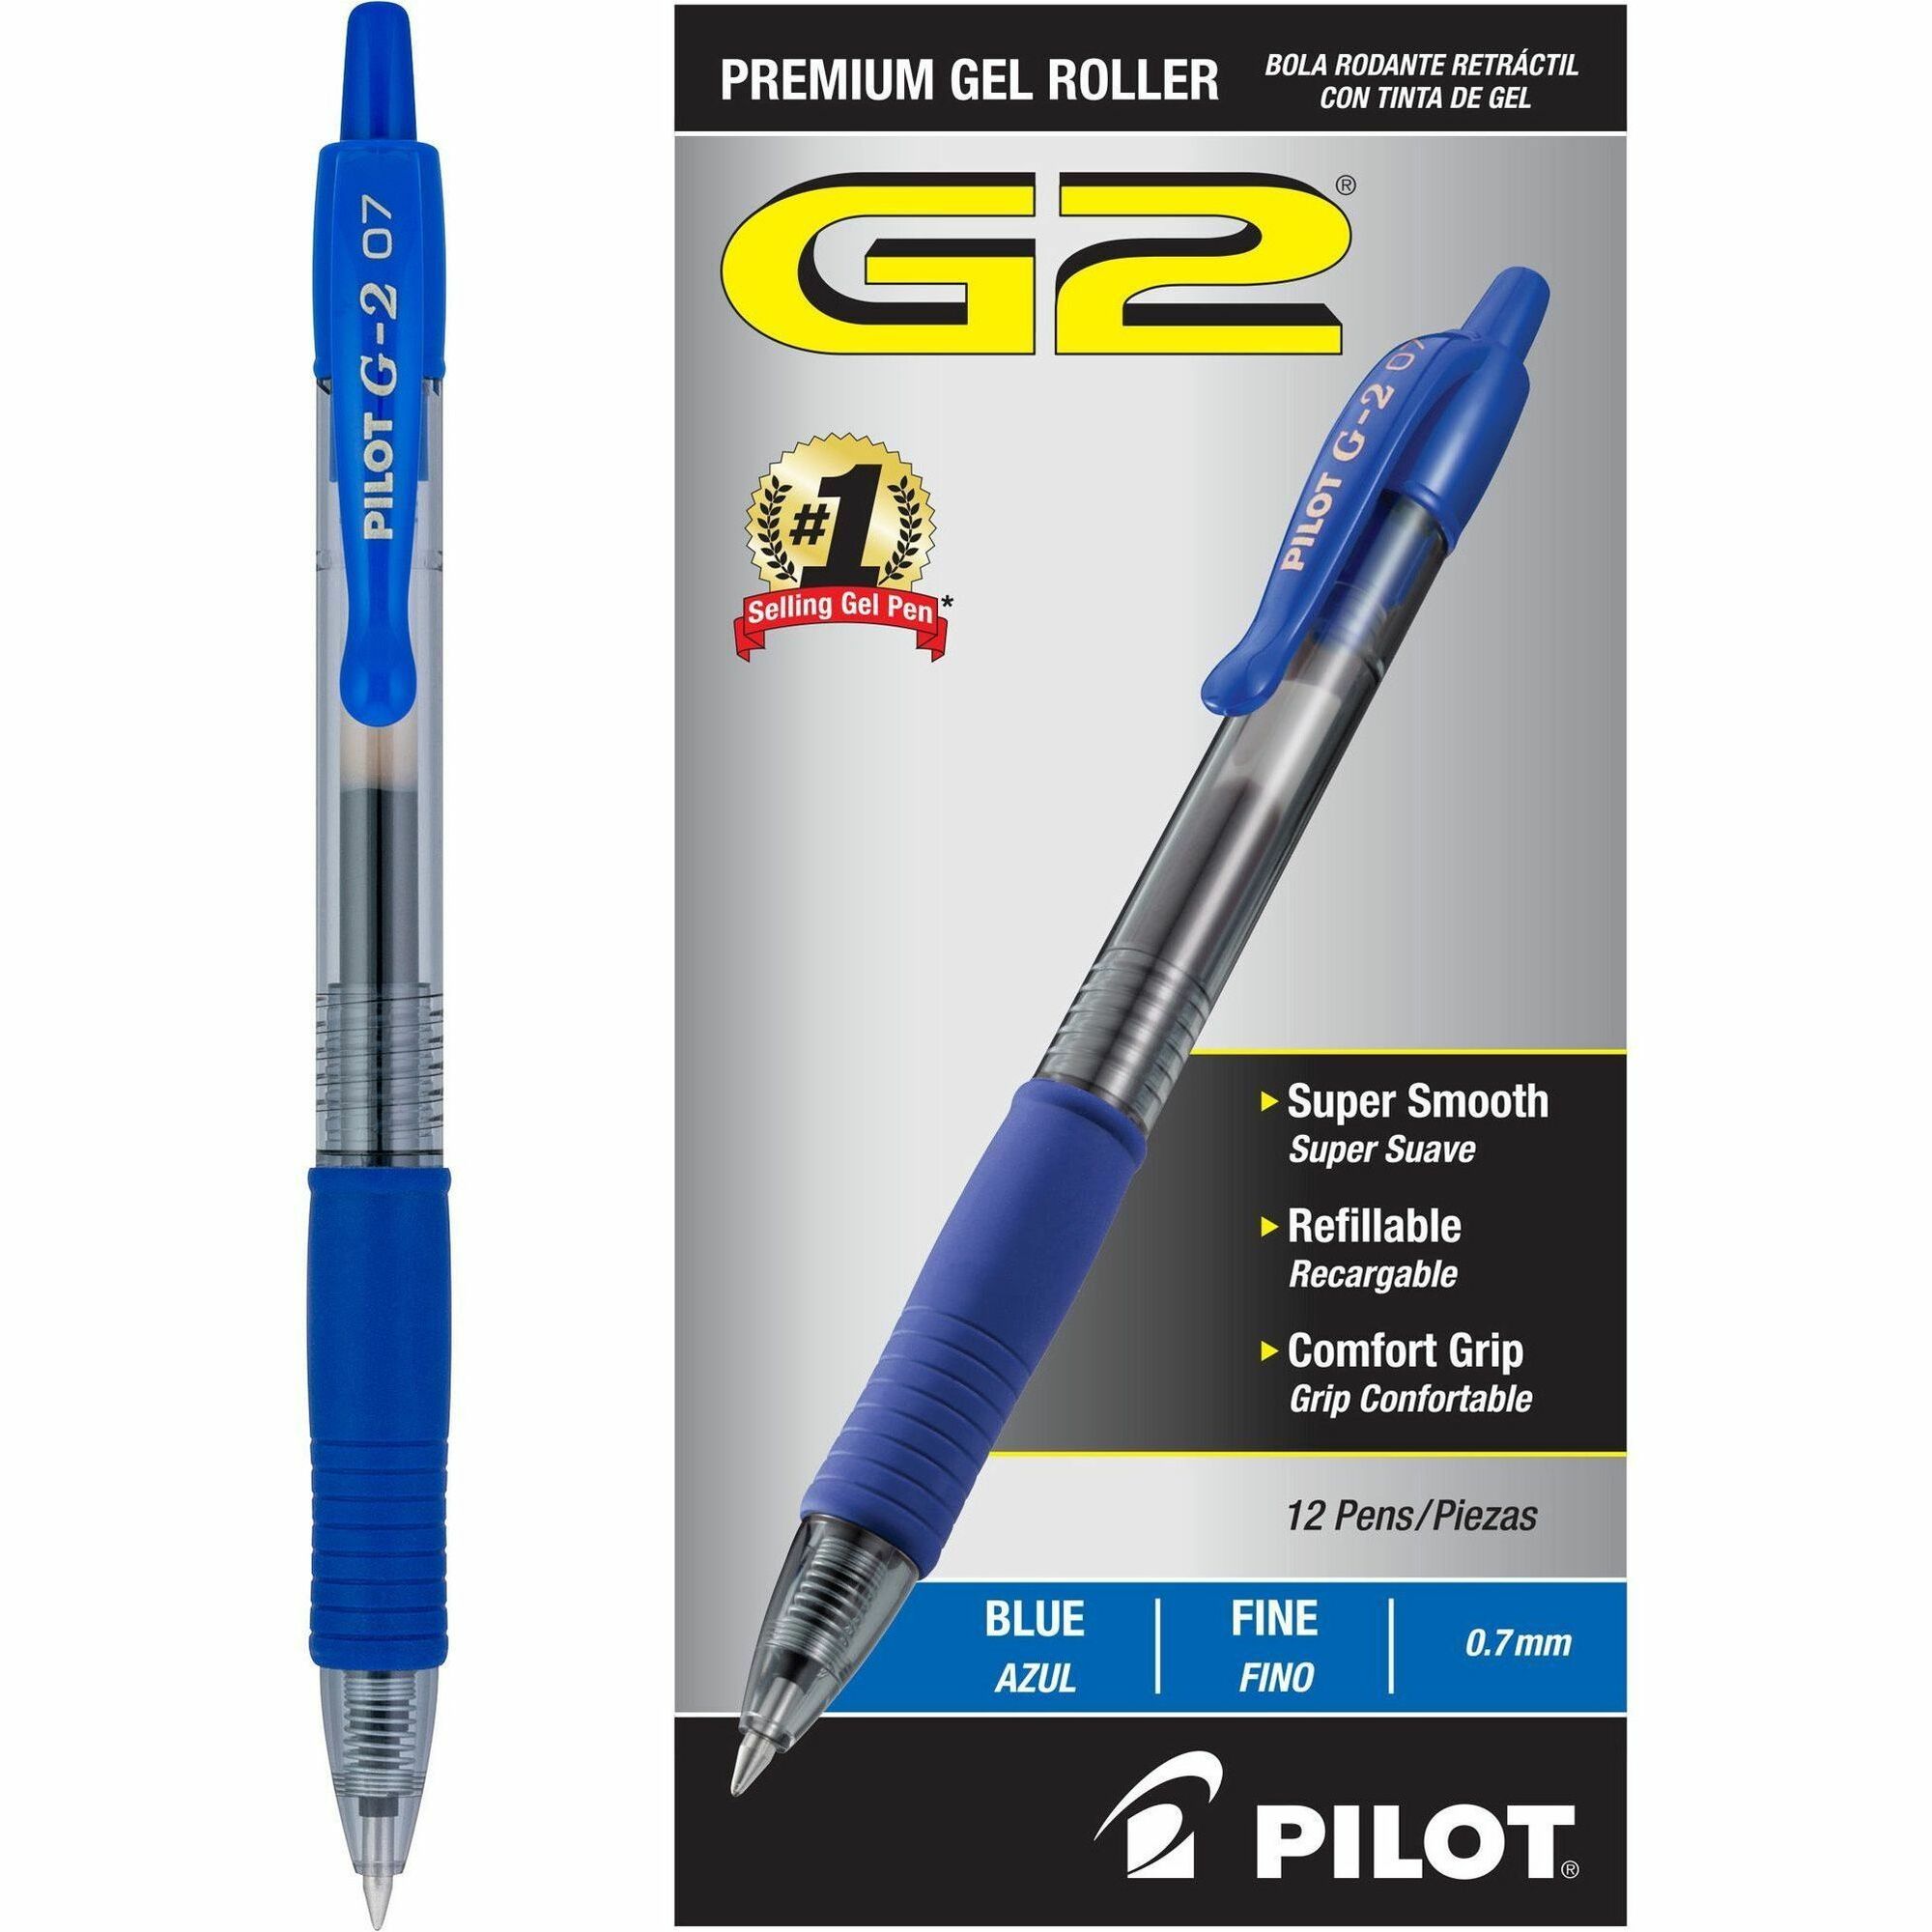 Paper Mate Profile 1.0mm Ballpoint Pens - Medium Pen Point